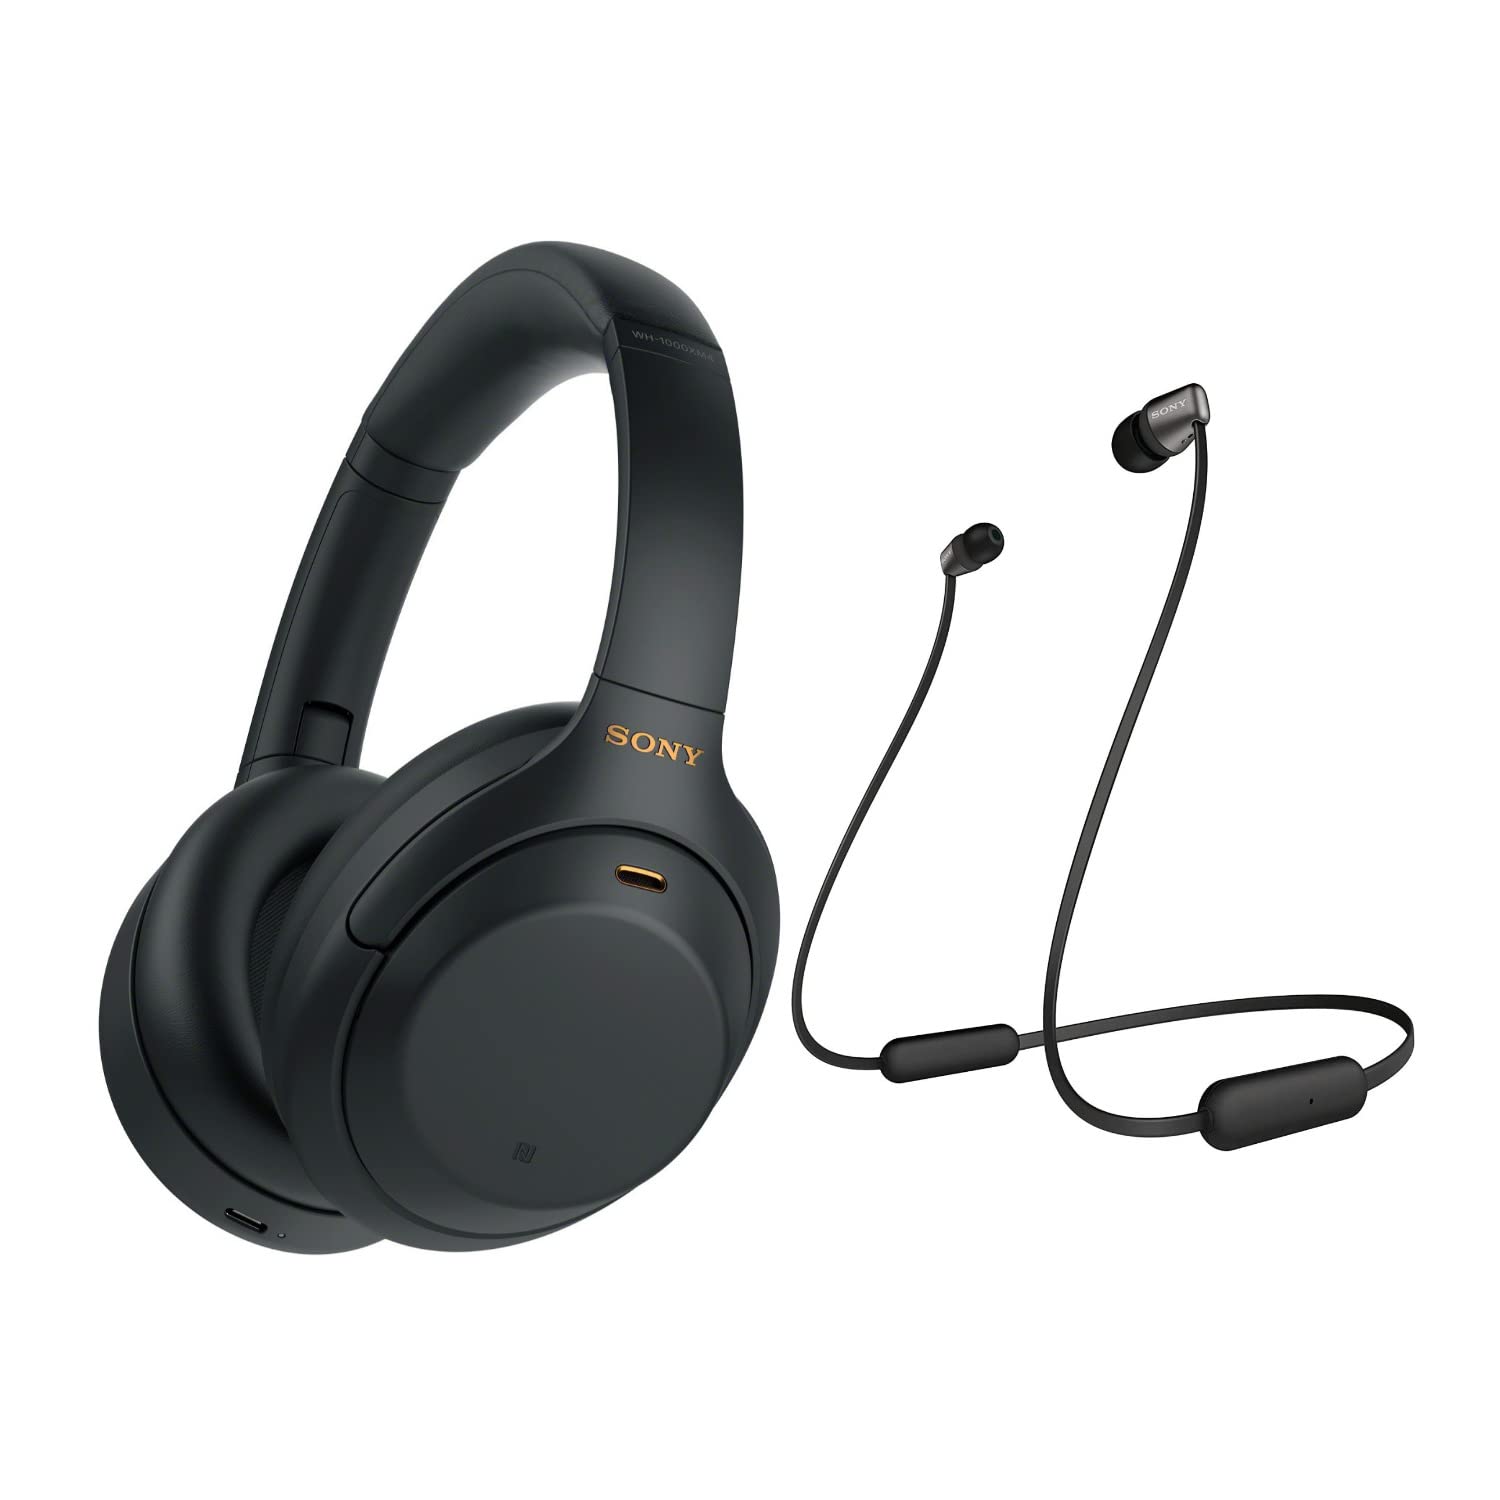  Sony WH-1000XM4 سماعات رأس لاسلكية لإلغاء الضوضاء فوق الأذن (أسود) مع مجموعة سماعات لاسلكية داخل الأذن - بطارية محمولة...